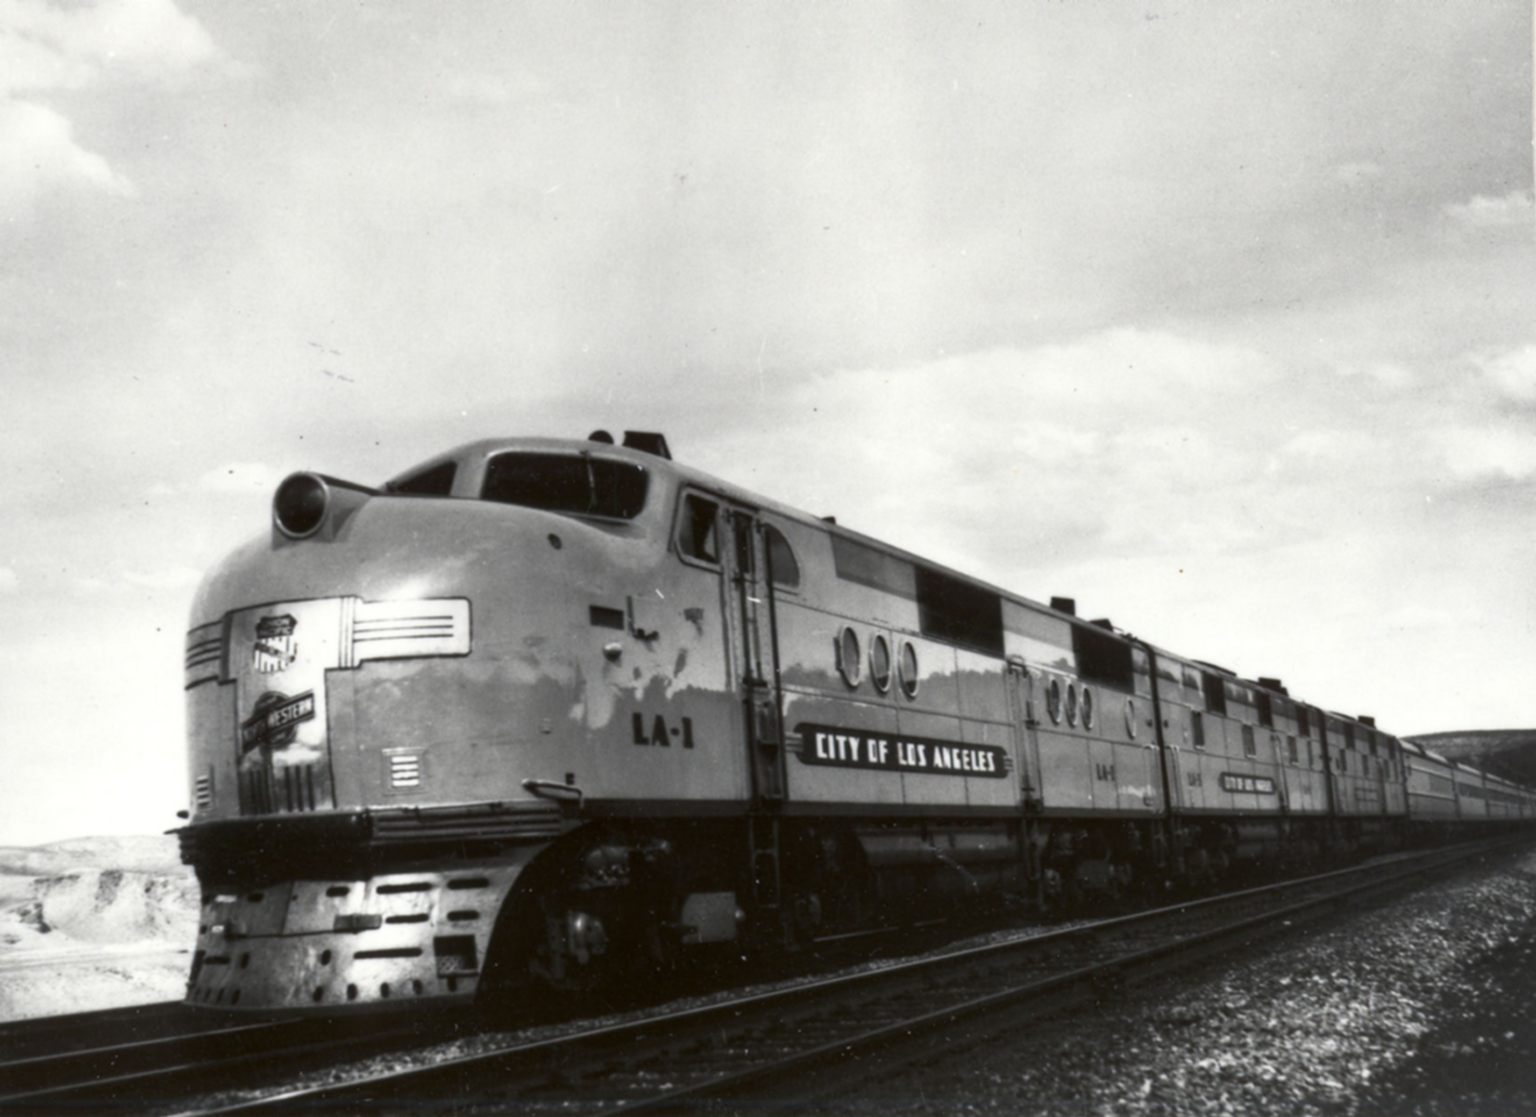 City of Los Angeles locomotive, Union Pacific Railroad